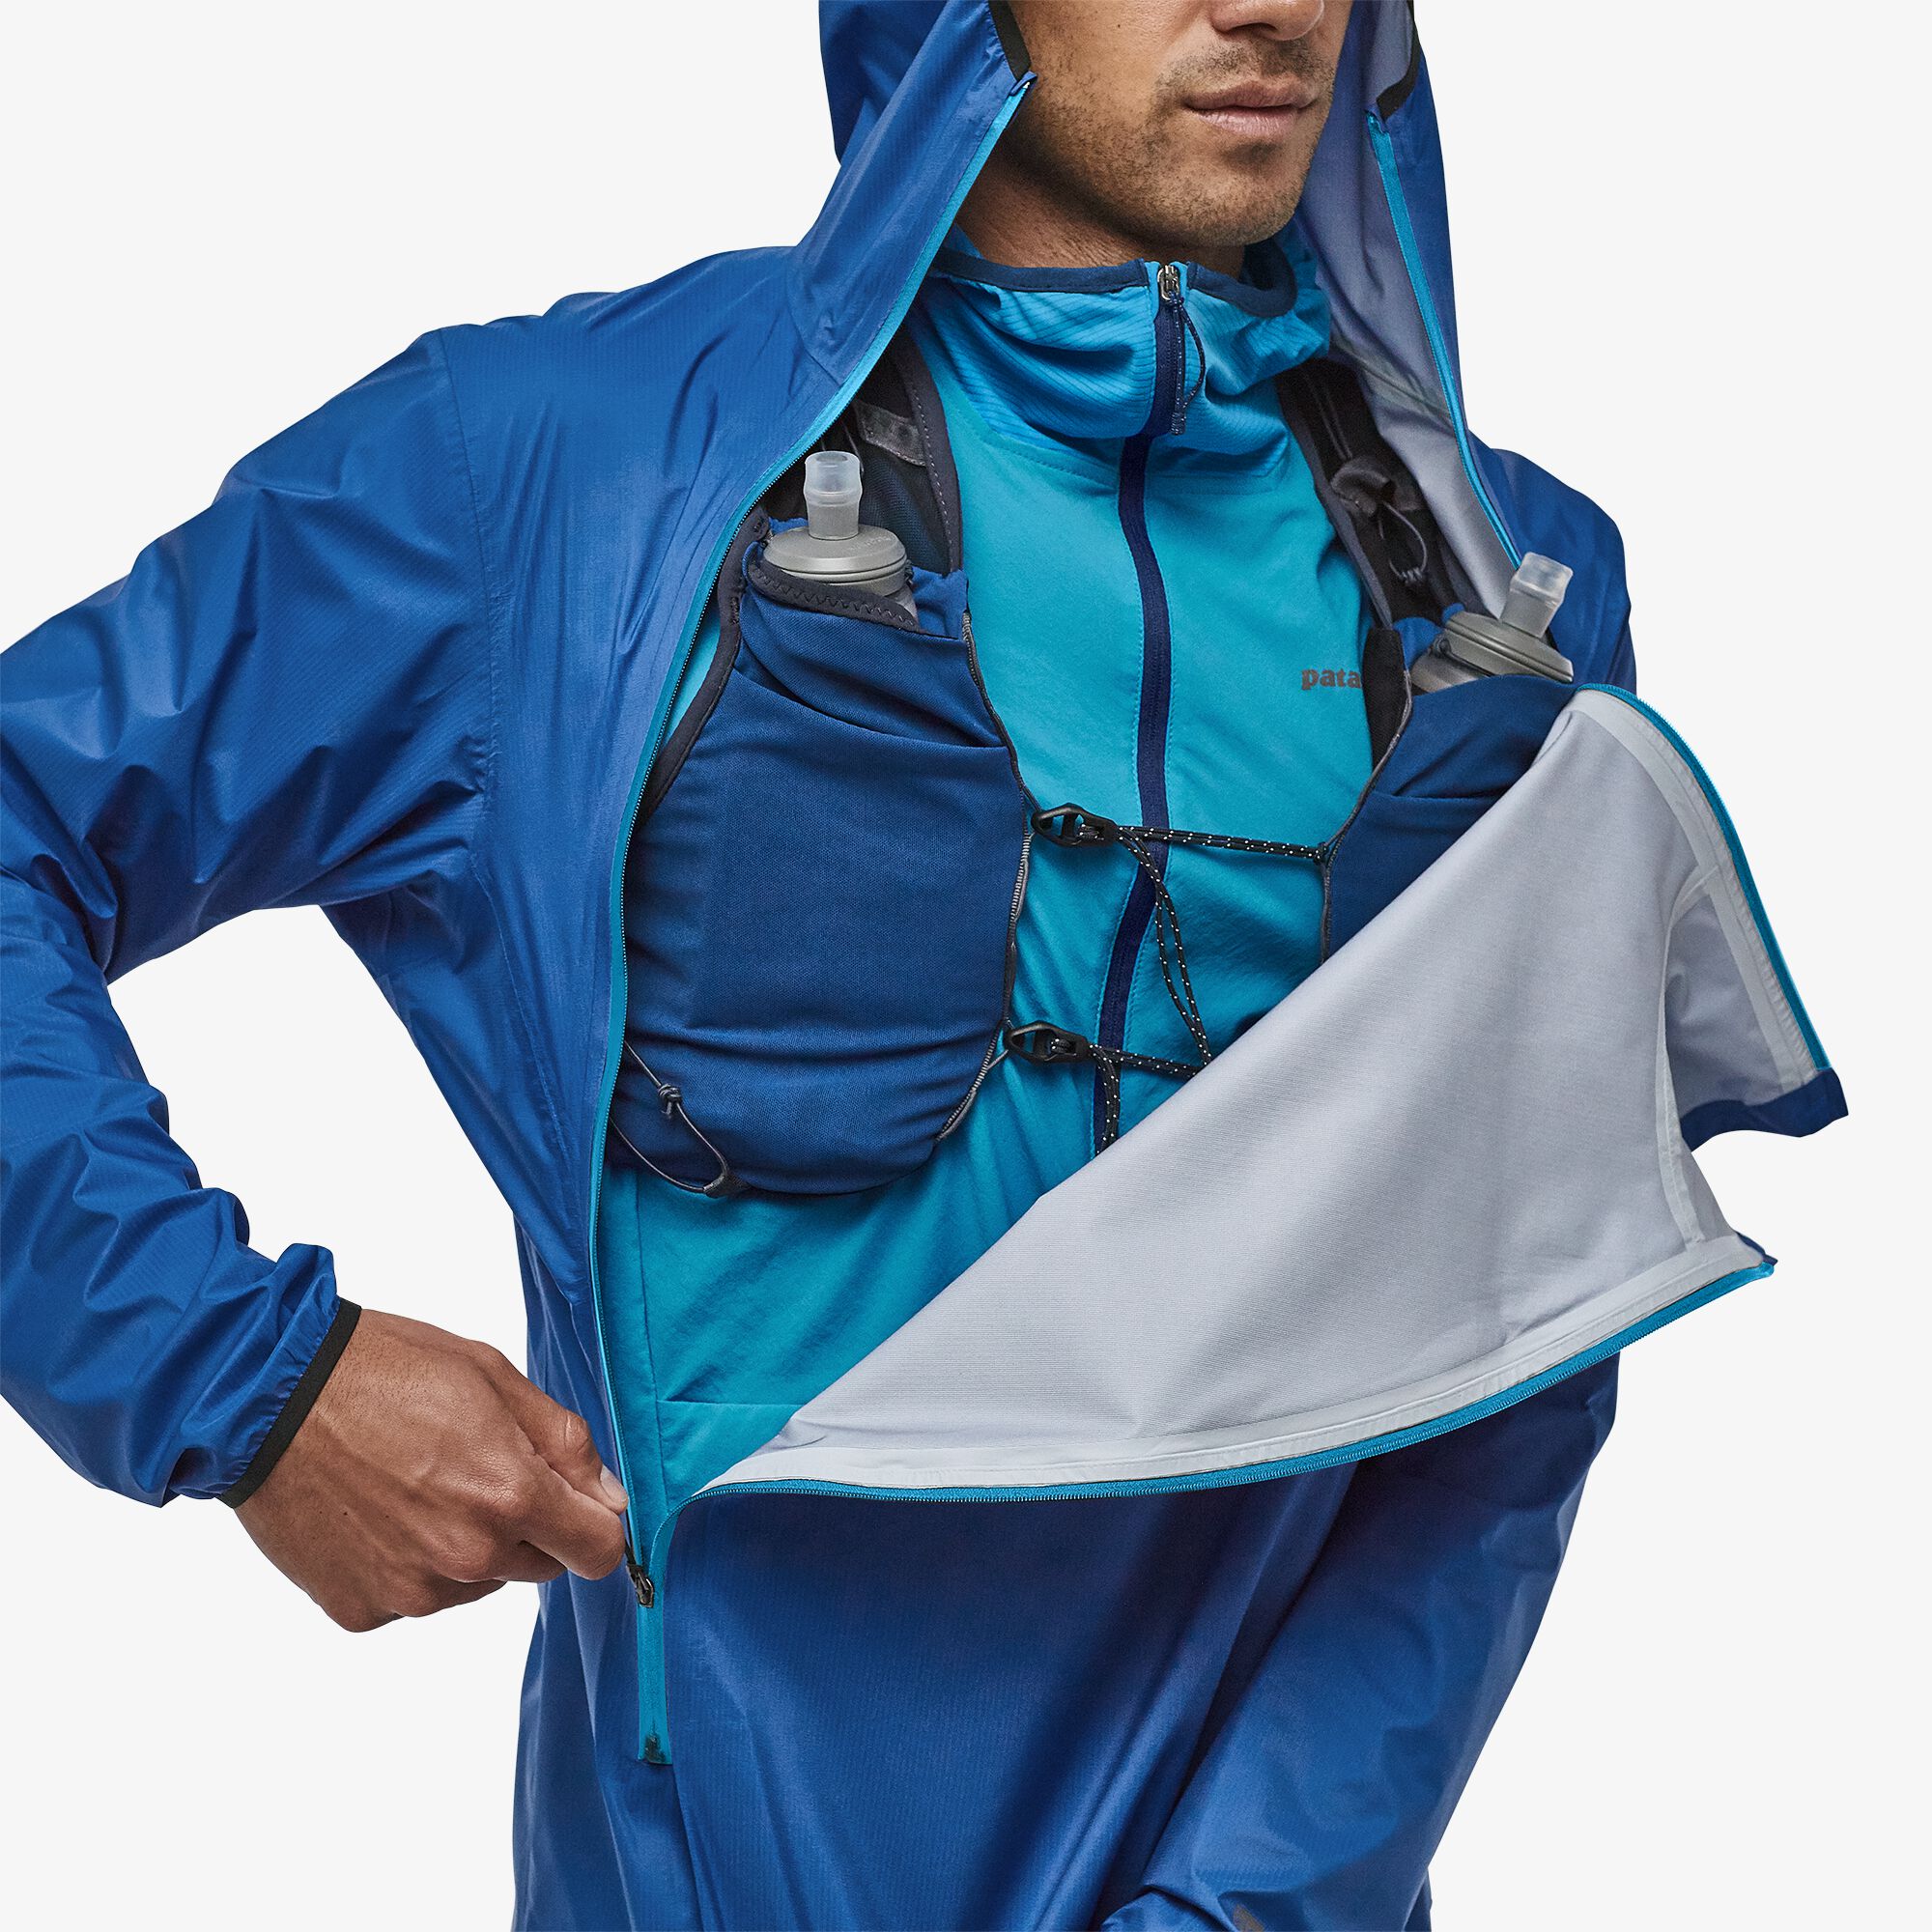 Patagonia Men's Storm Racer Waterproof Running Jacket